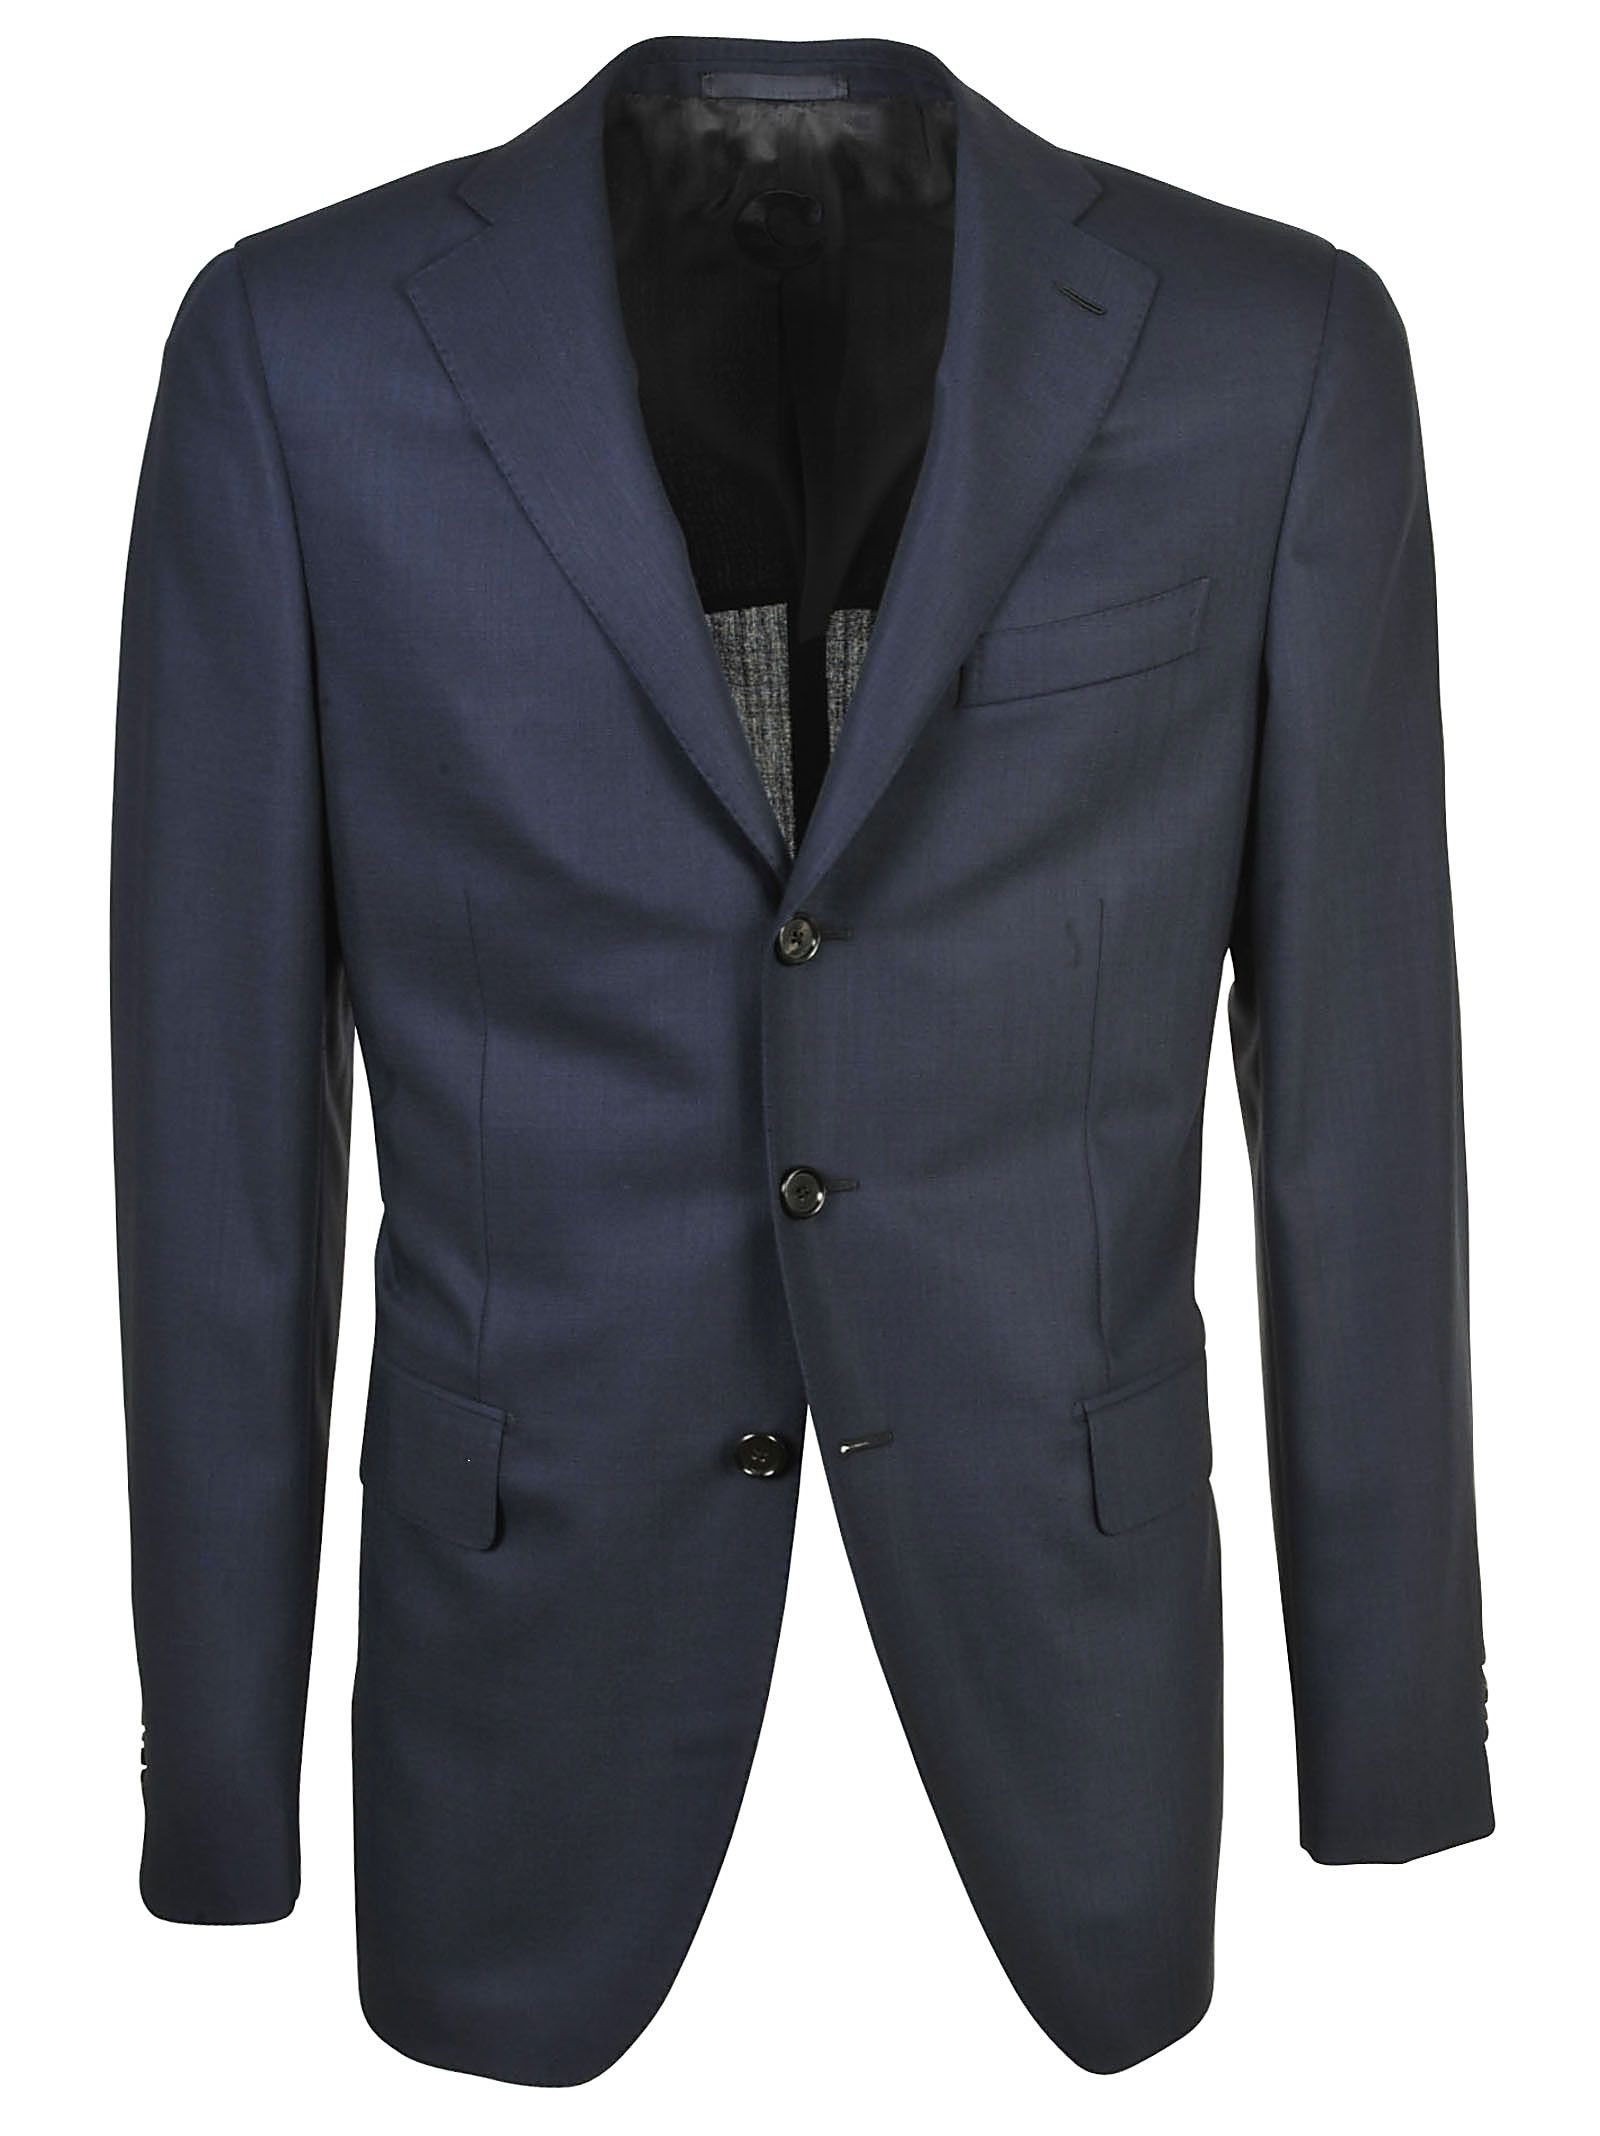 Navy Blue Suit 23 - StyleMann